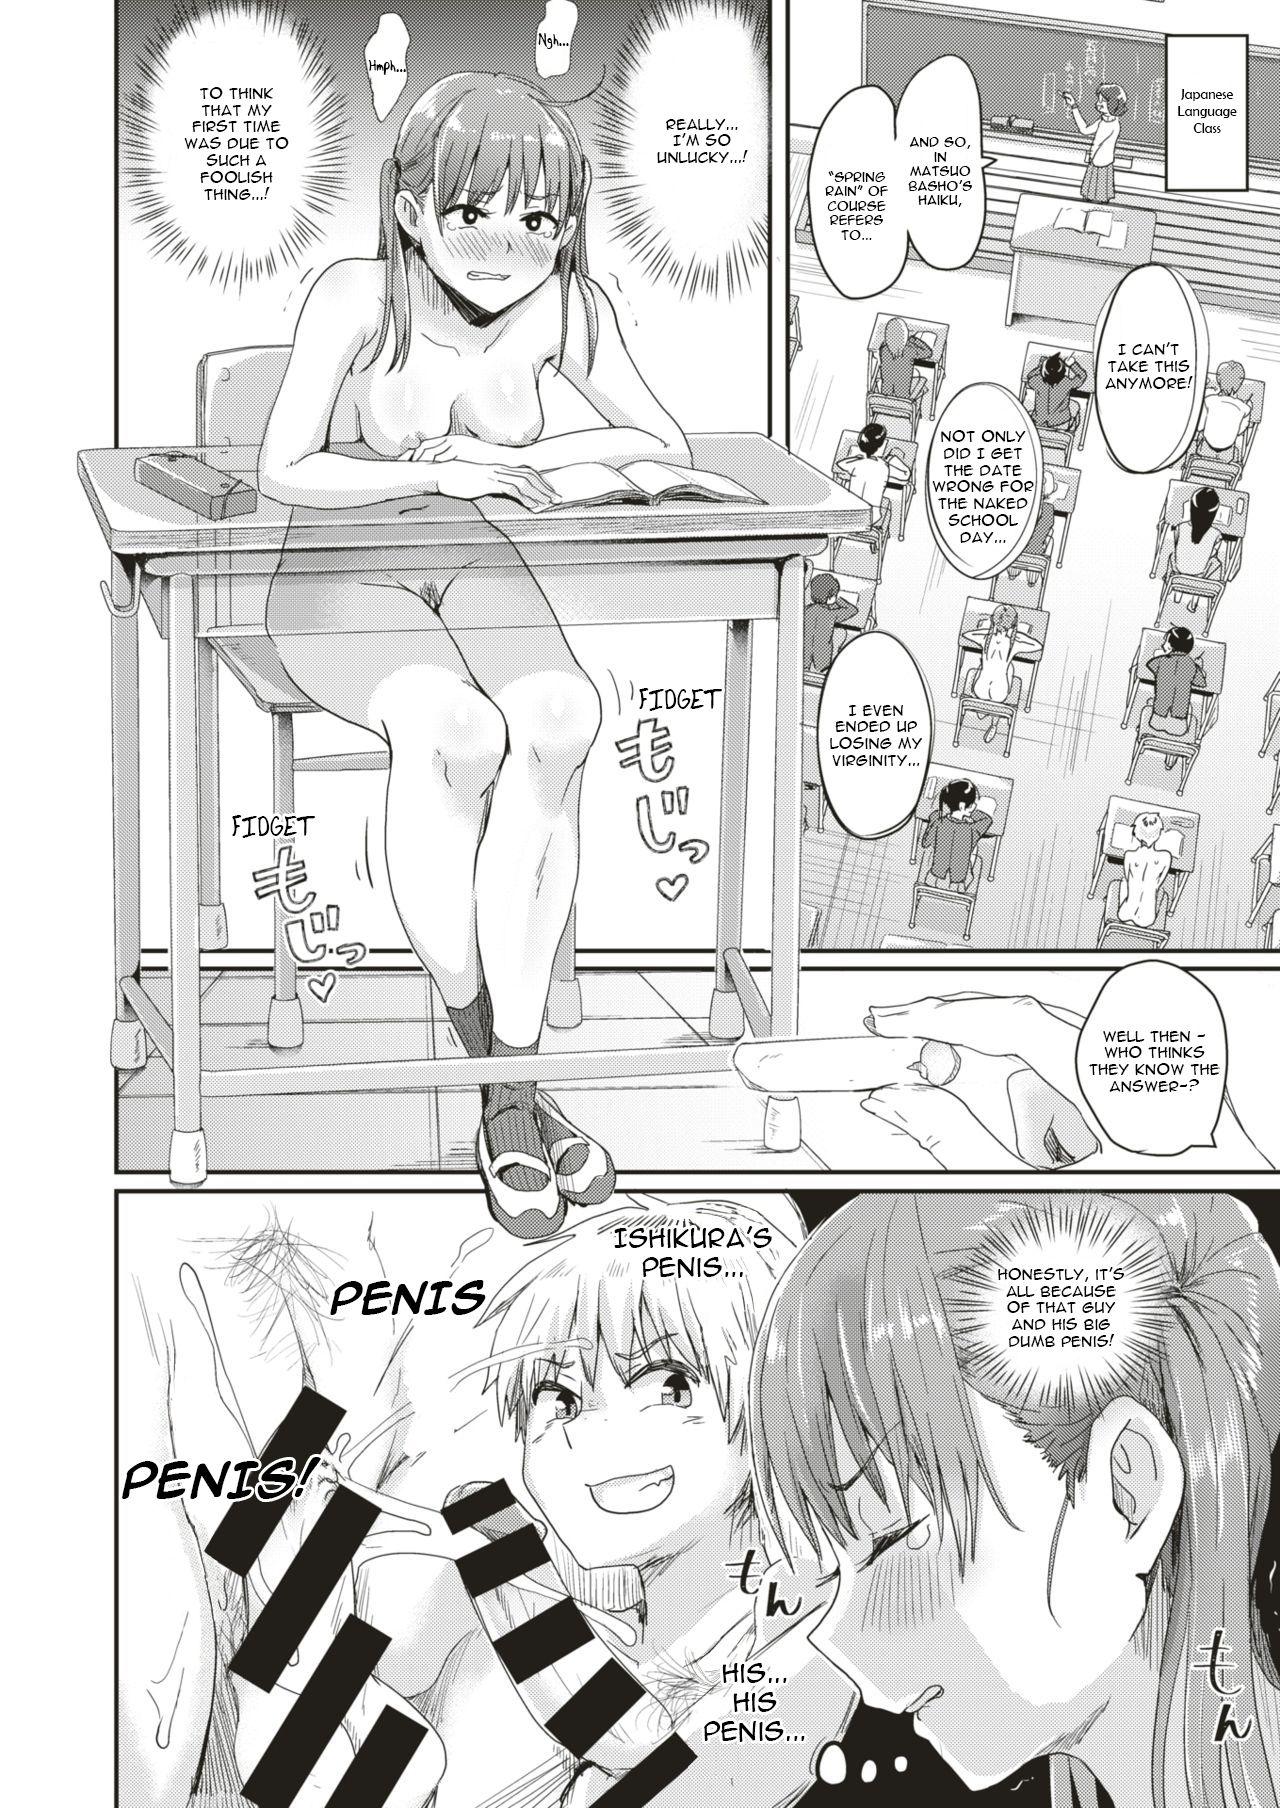 Petite Teenager Honjitsu wa Zenra Toukoubi!? | Today is a Naked Schoolday!? Rola - Page 13